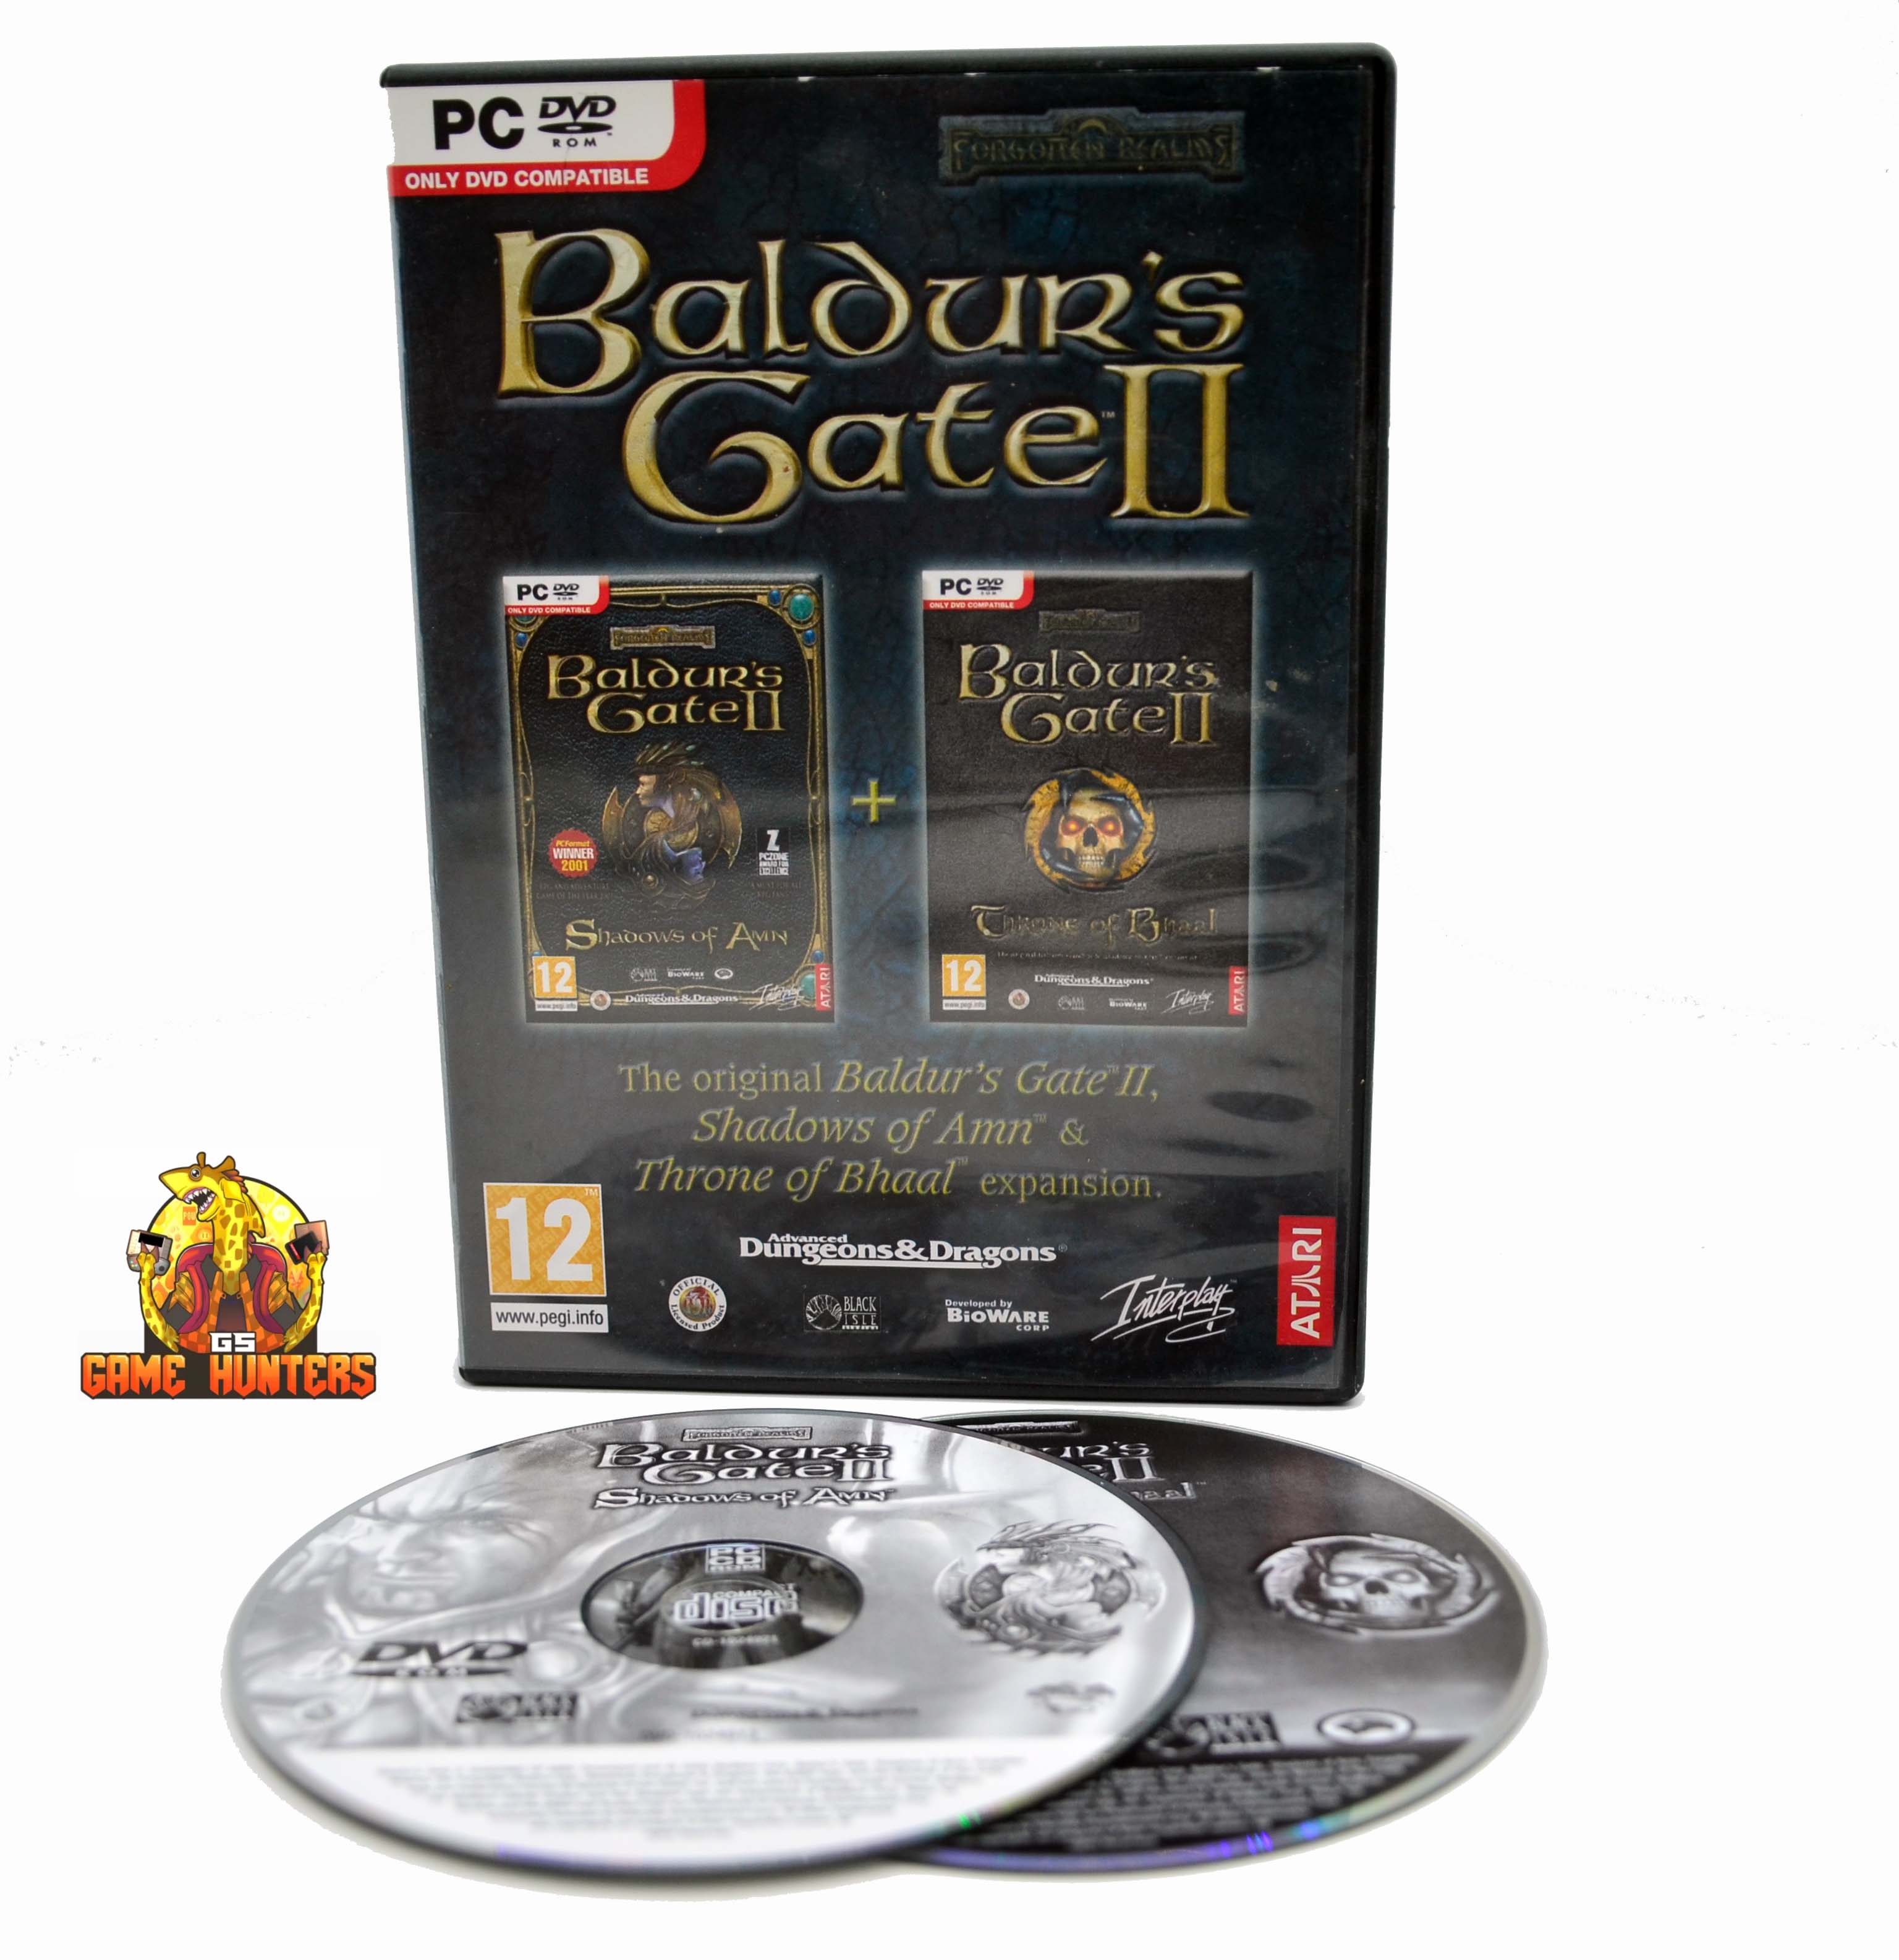 Baldur's Gate II Shadows of Amn & Throne oif Bhaal Expansion pack Case & Discs.jpg  by GSGAMEHUNTERS